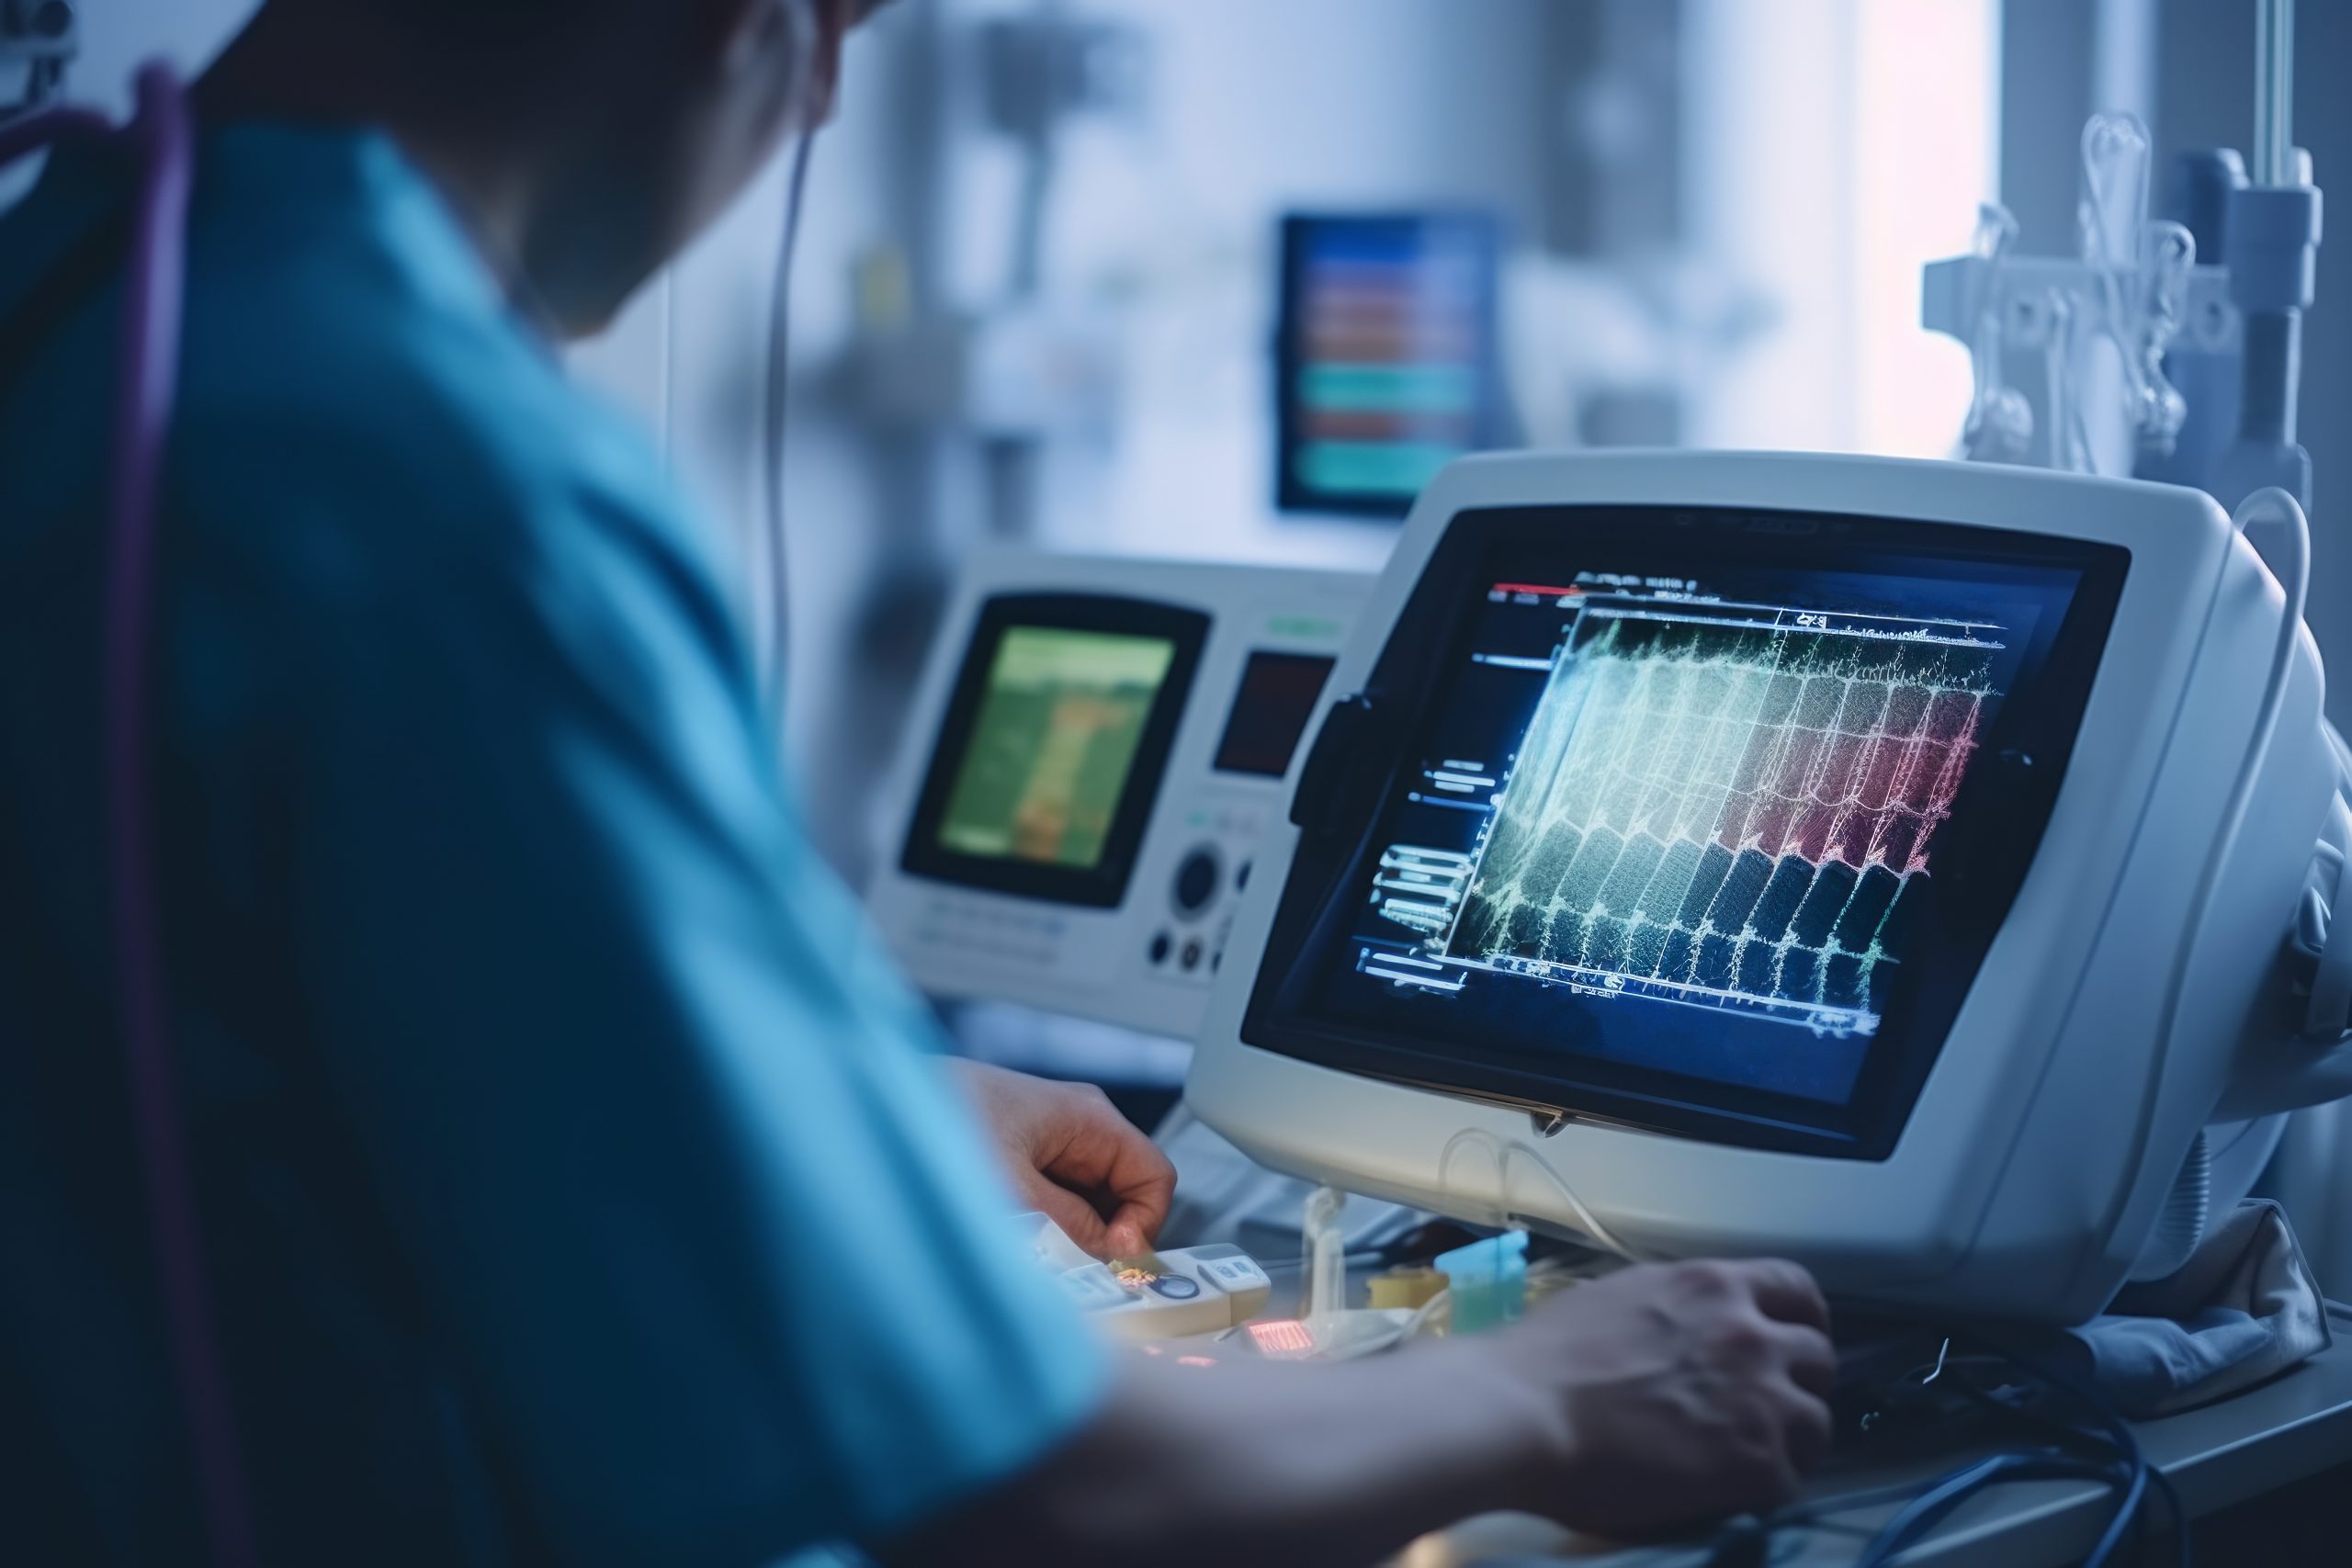 healthtech-startup-dozee-unveils-ambulatory-patient-monitoring-system-dozee-pro-ex